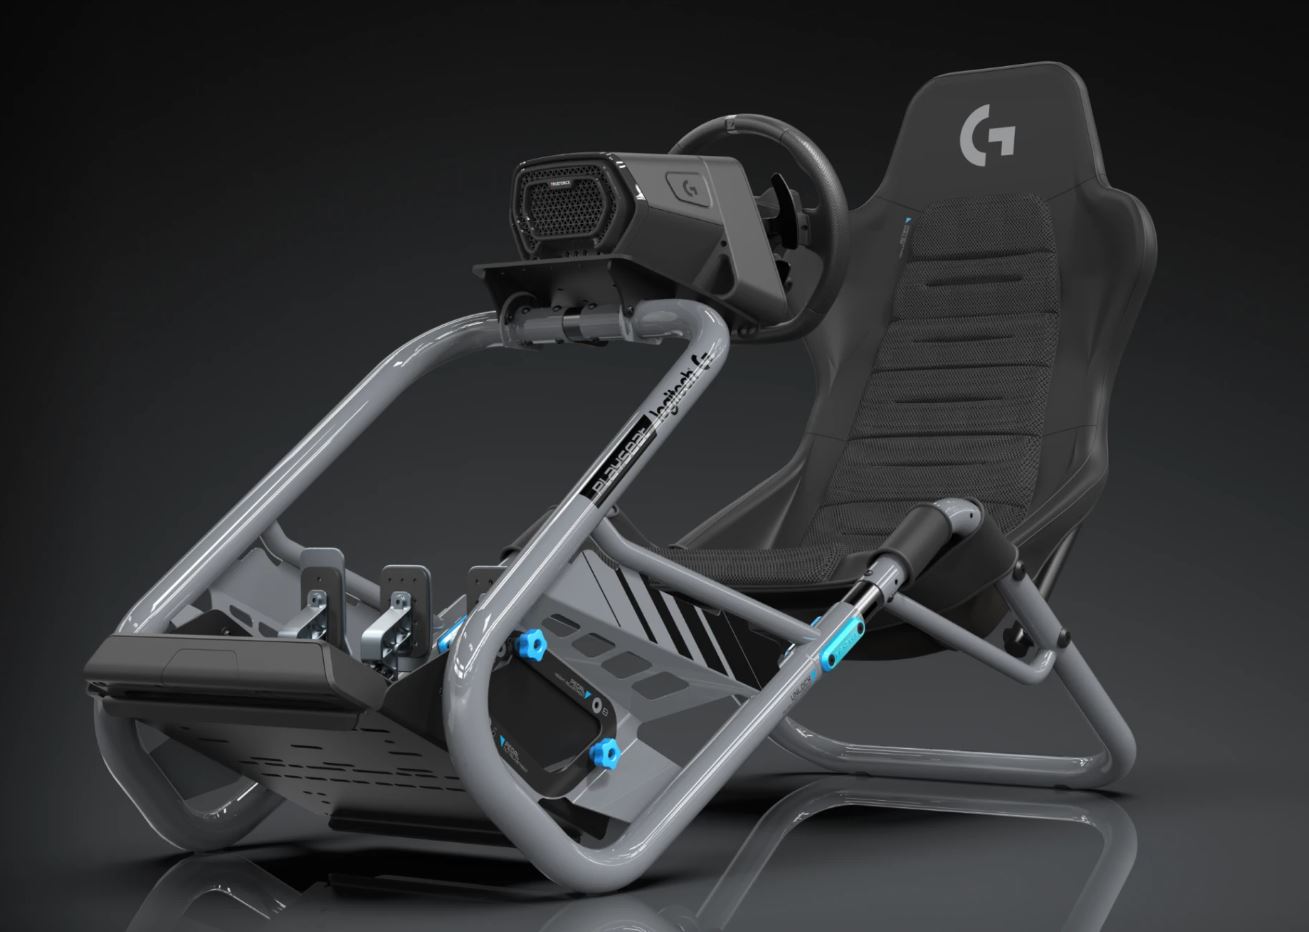 Logitech präsentiert neues Direct-Drive-Lenkrad PRO Racing Wheel für PC,  PlayStation & XBox -  News